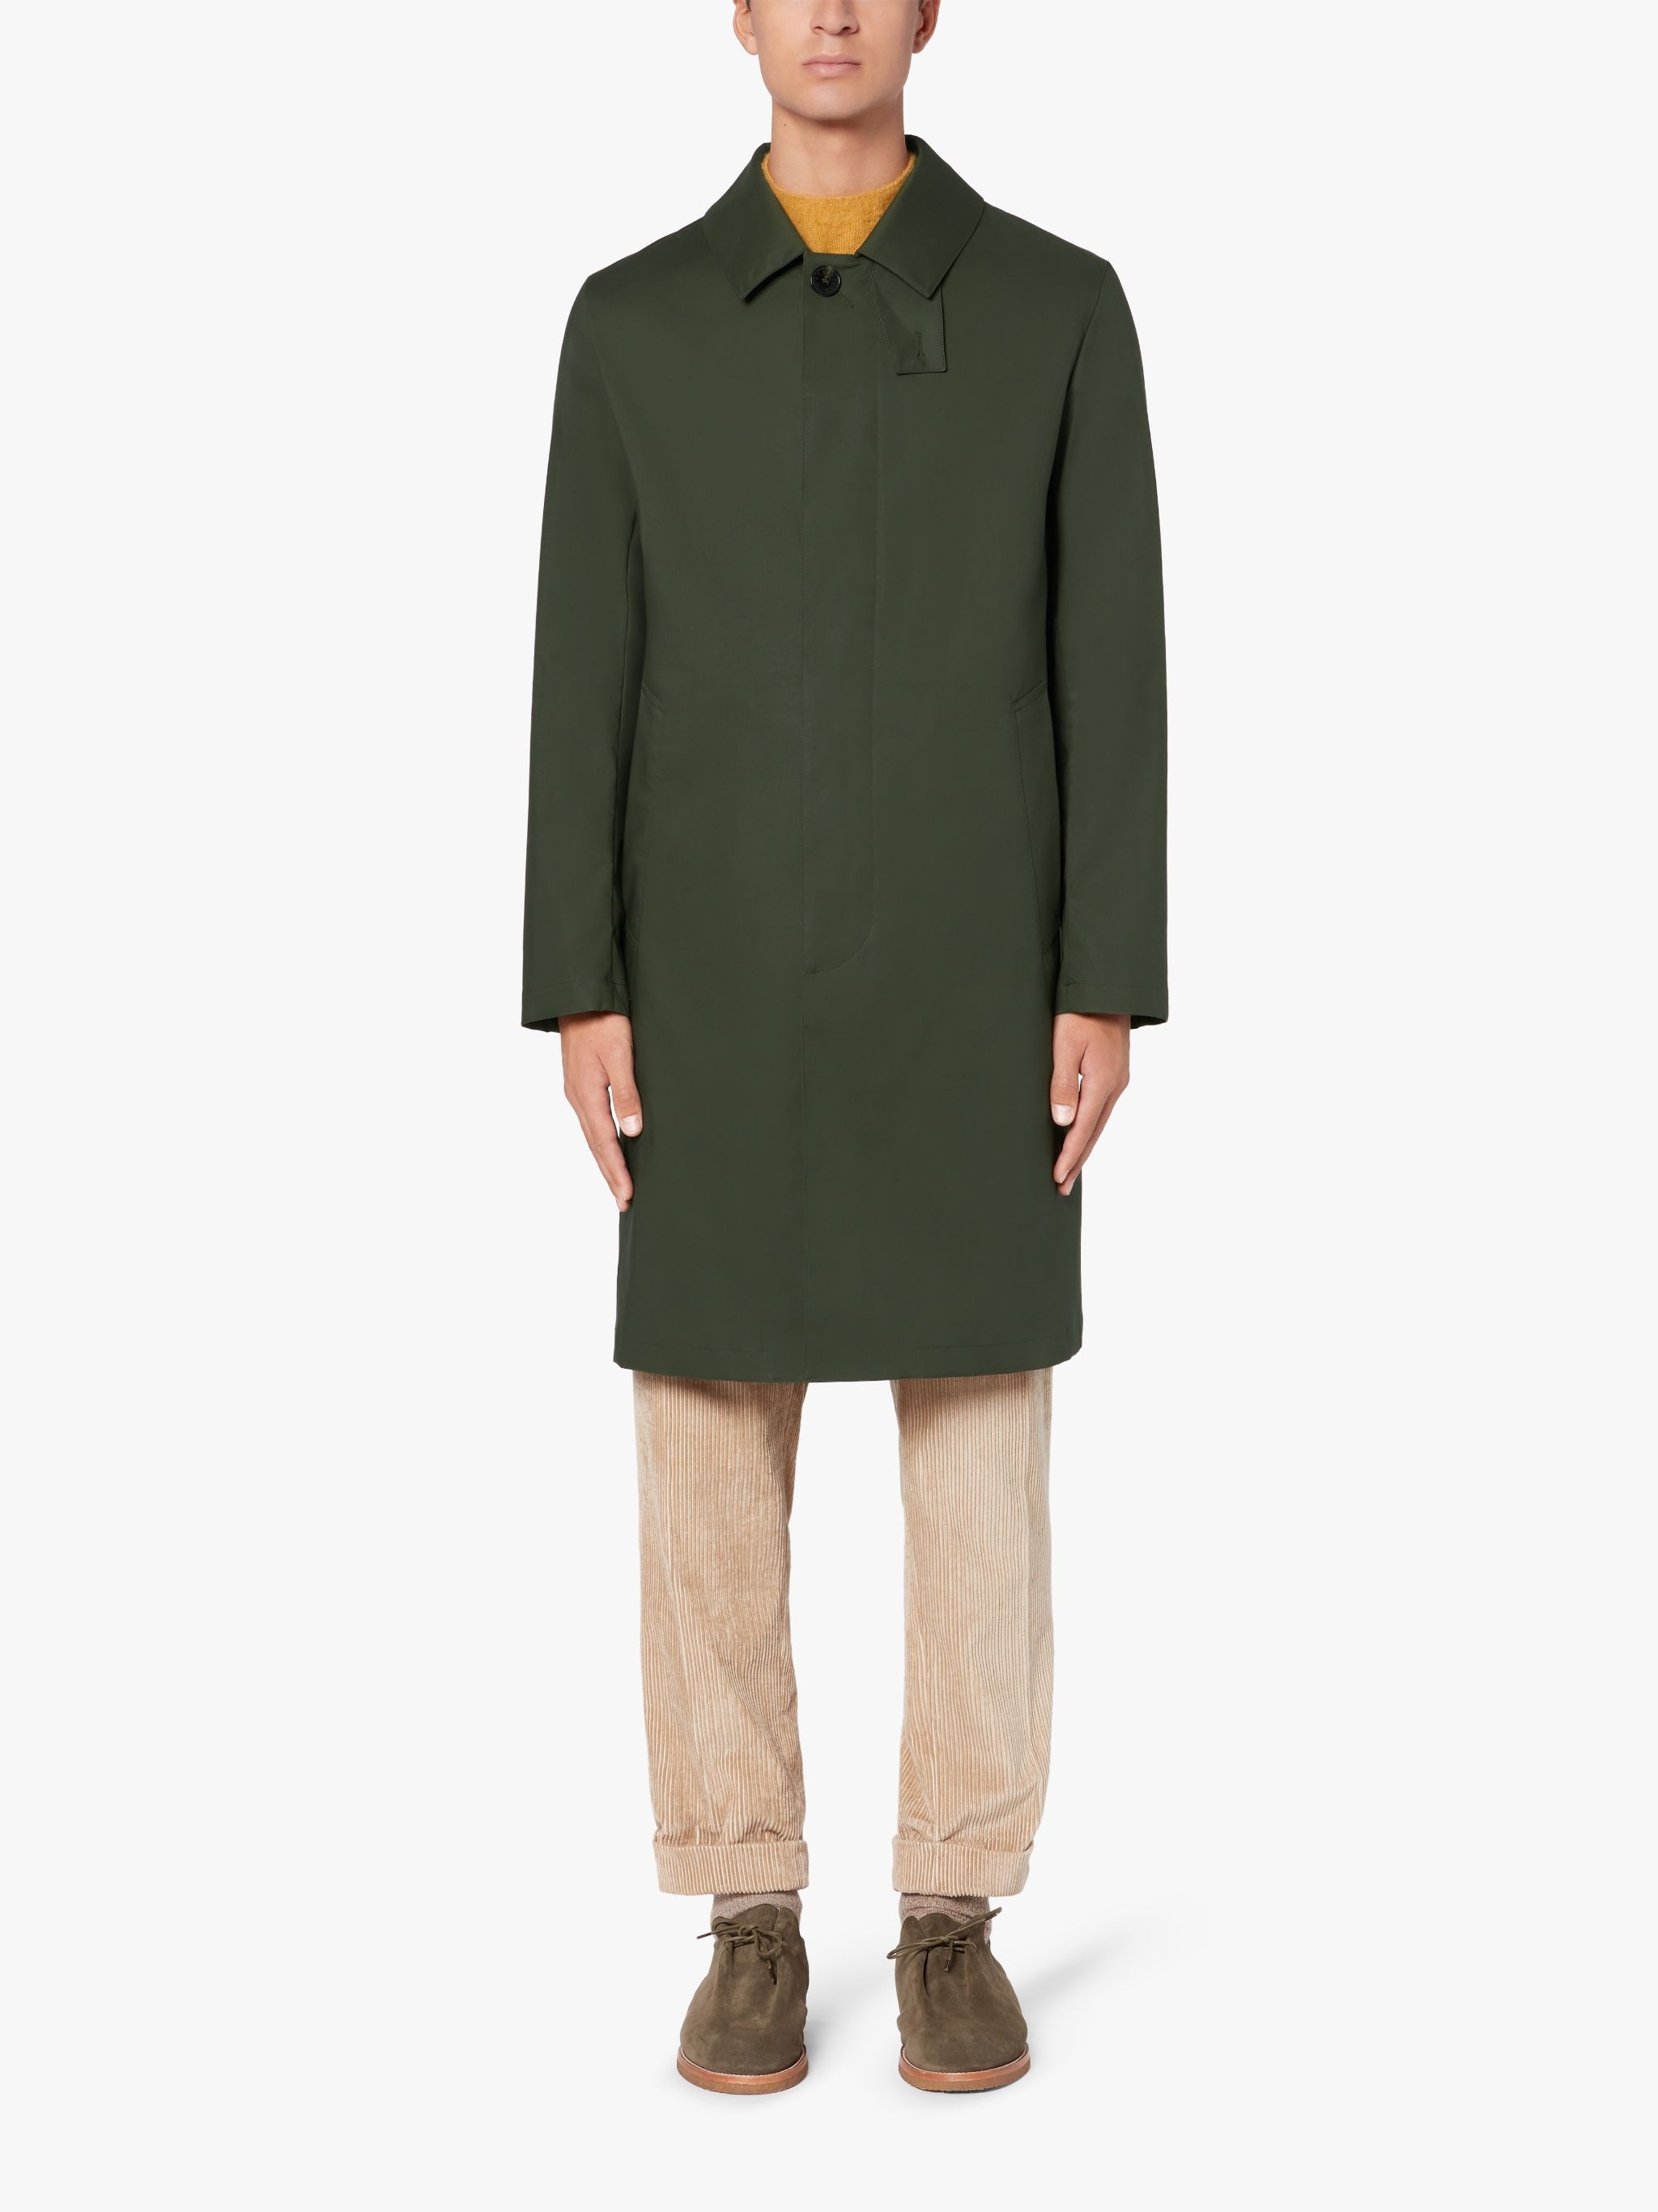 Mackintosh Soho Eco Dry raincoat - Green